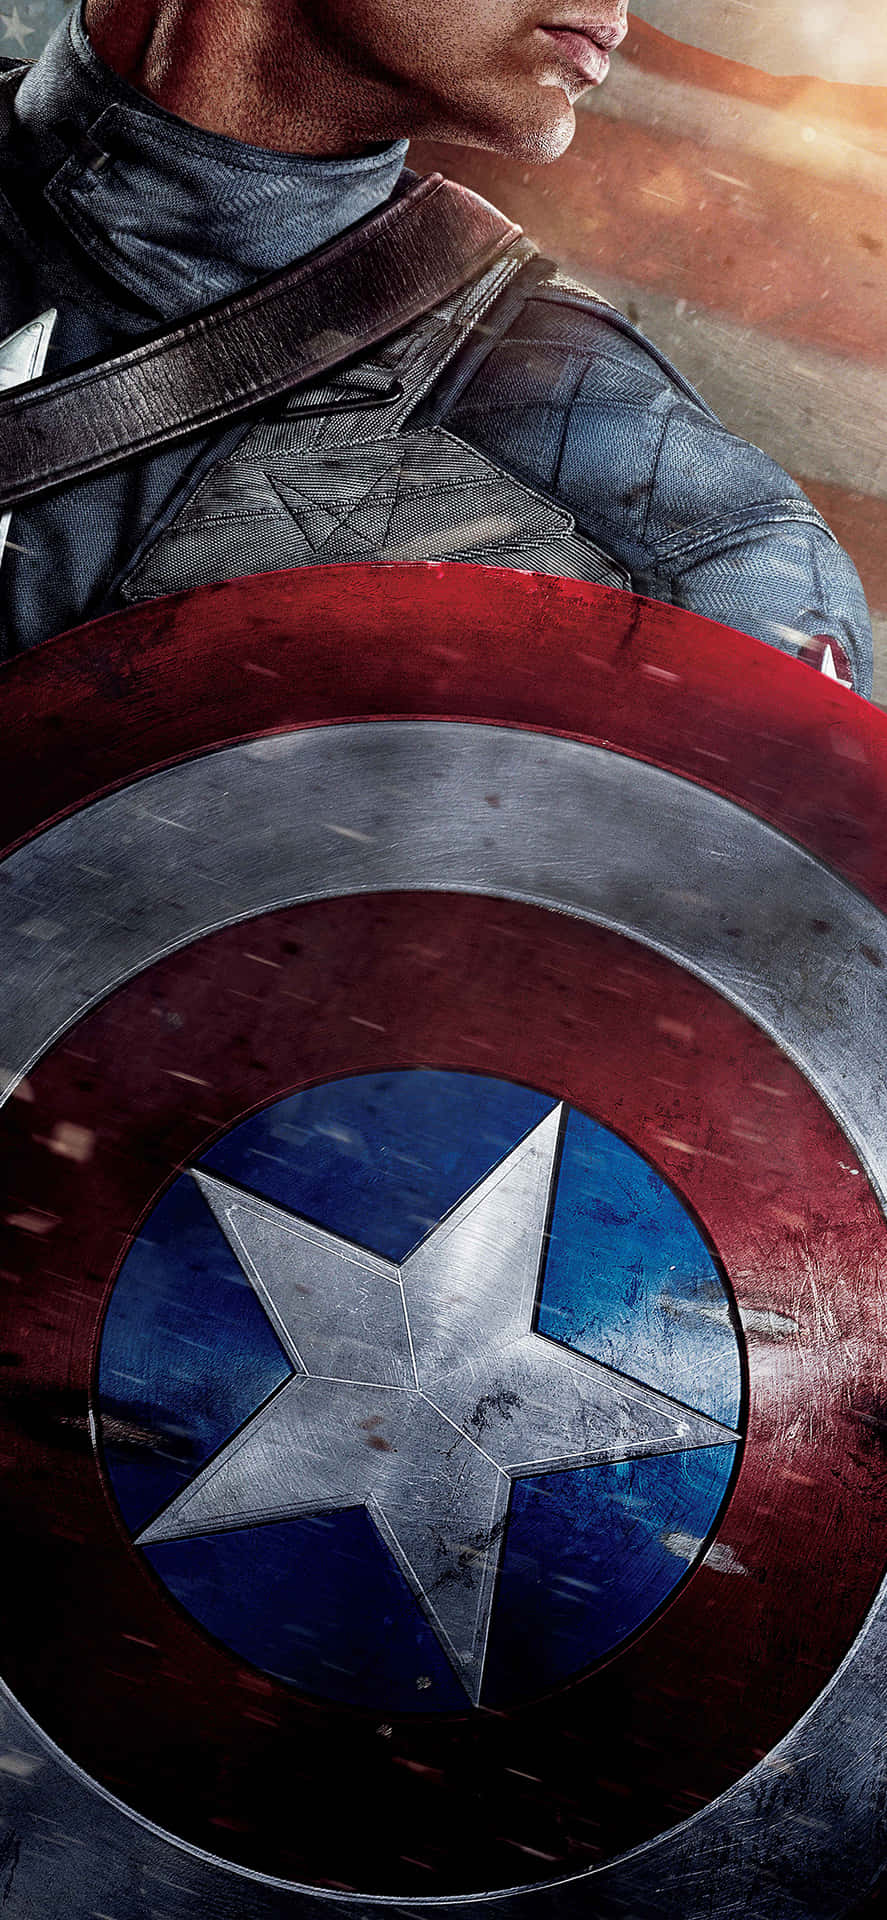 MCU Hero Captain America Shield Background